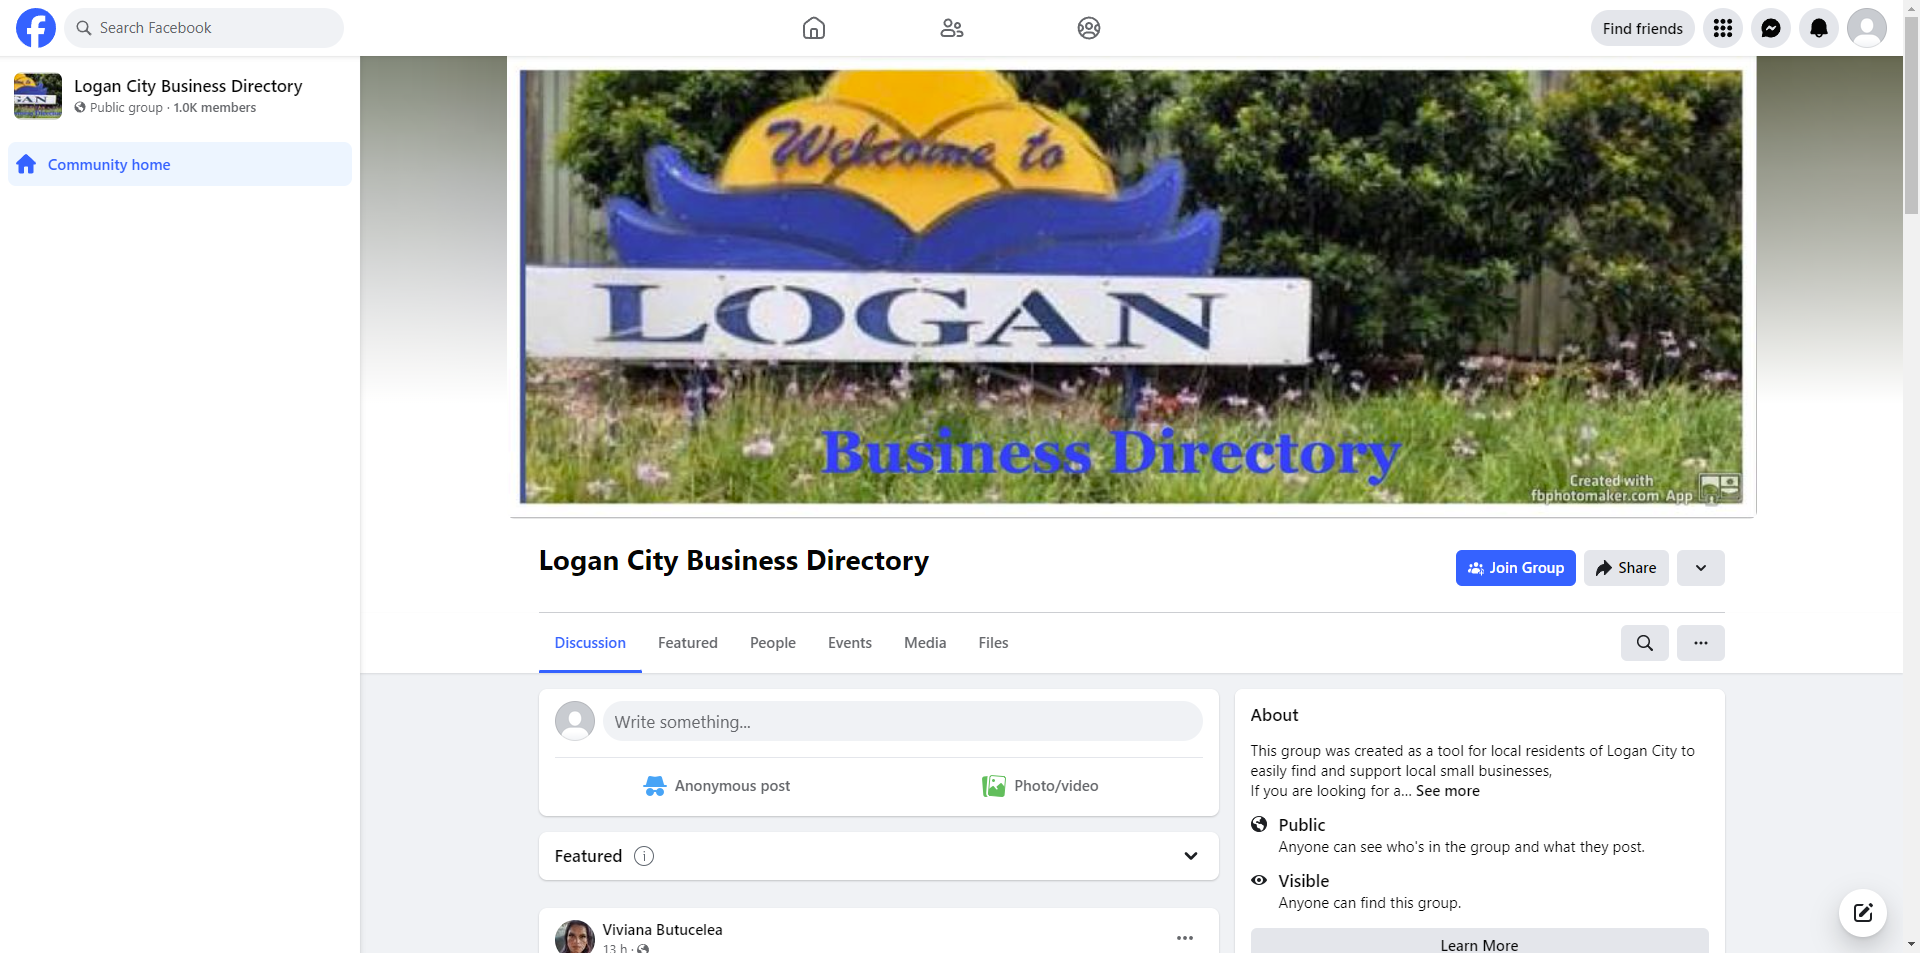 Logan City Business Directory